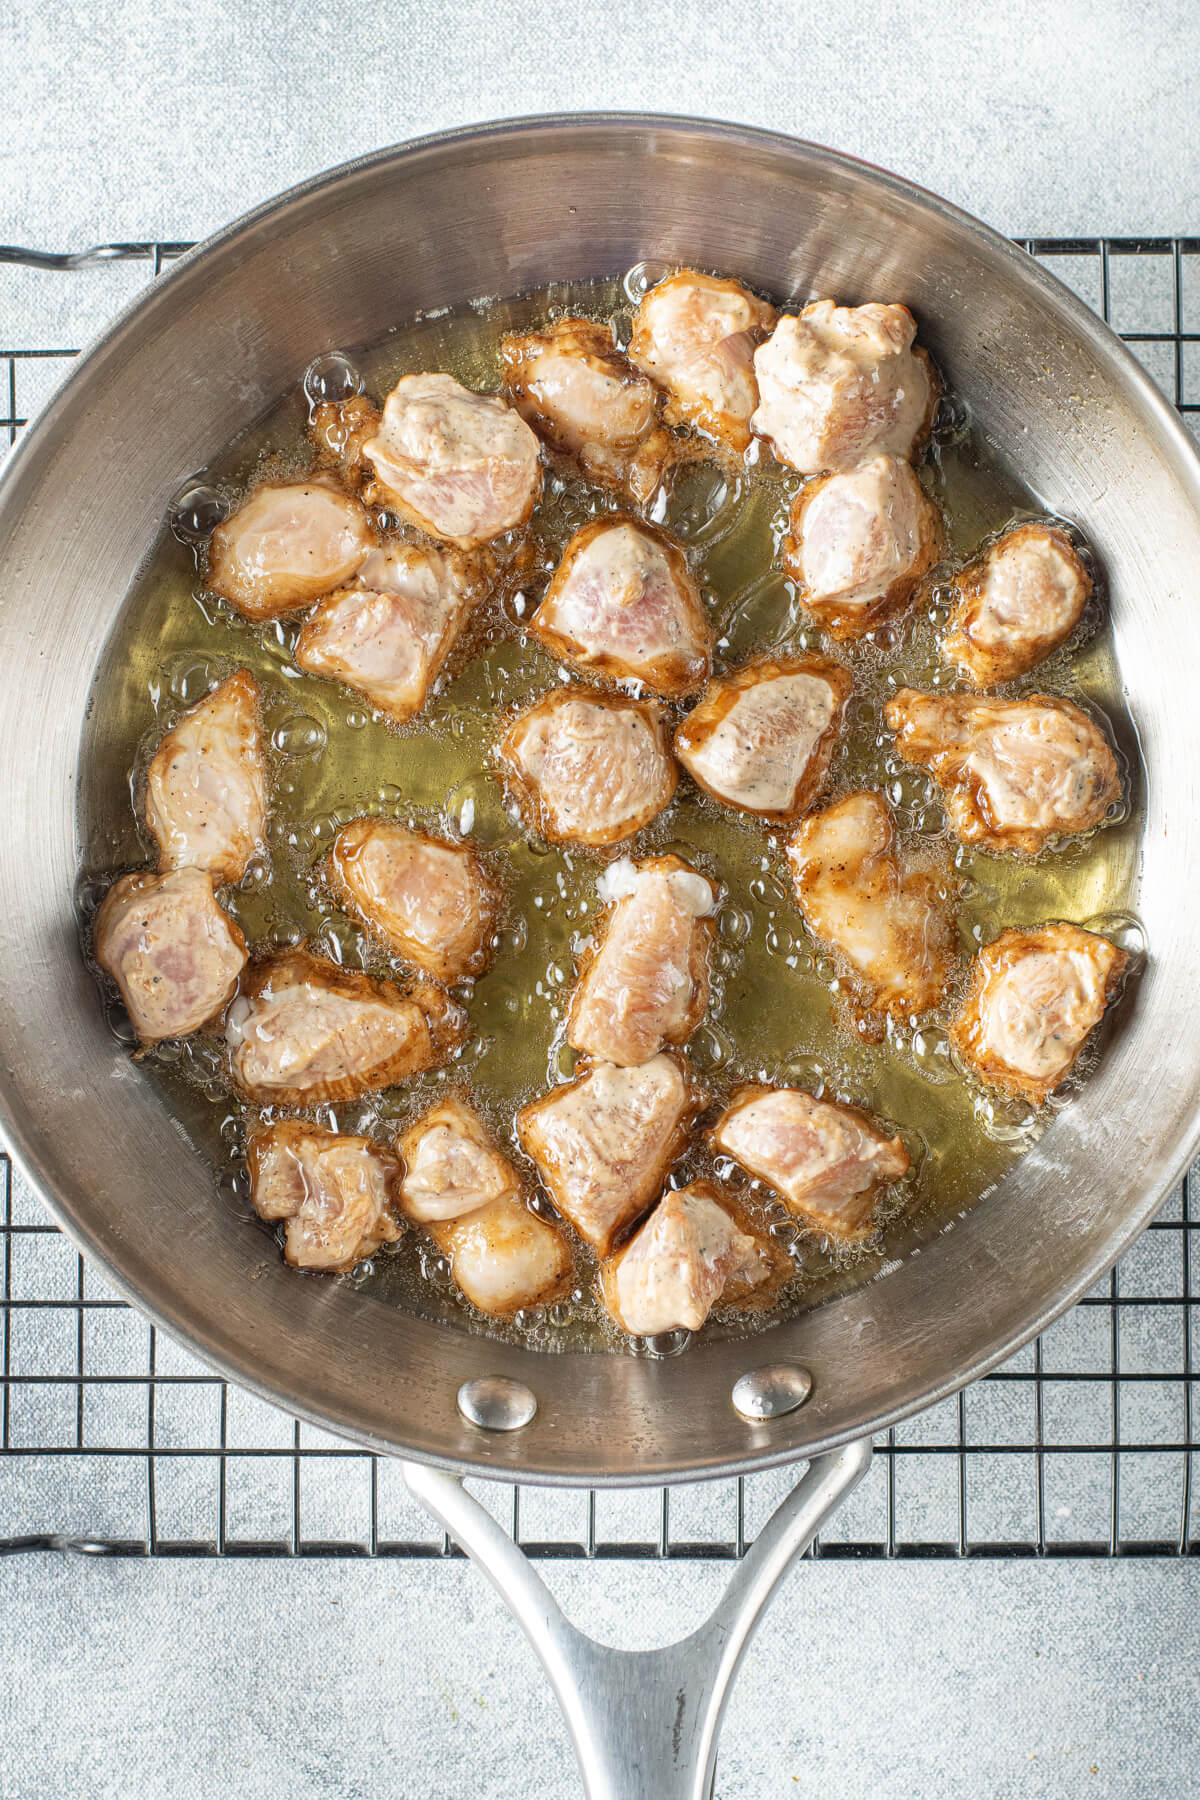 Stir frying chicken in a frying pan.